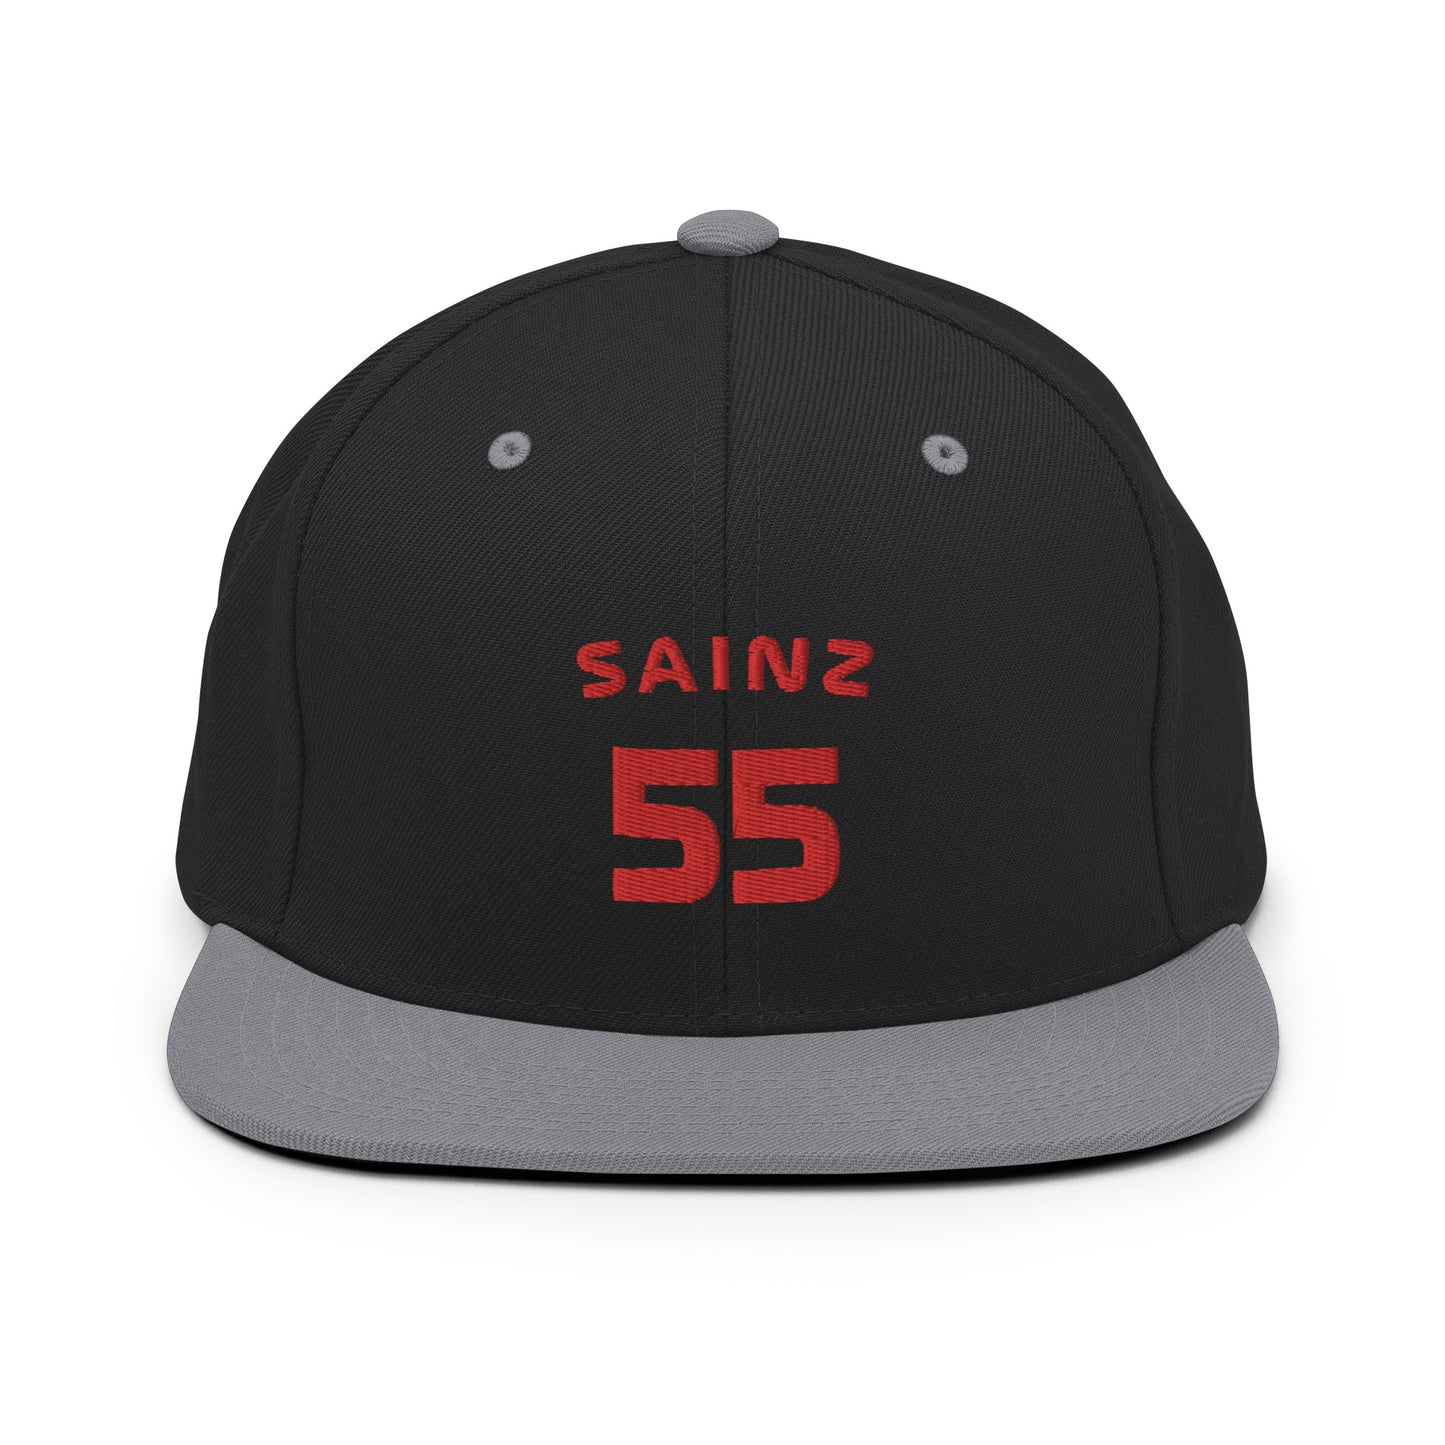 carlos sainz 55 snapback hat black and grey